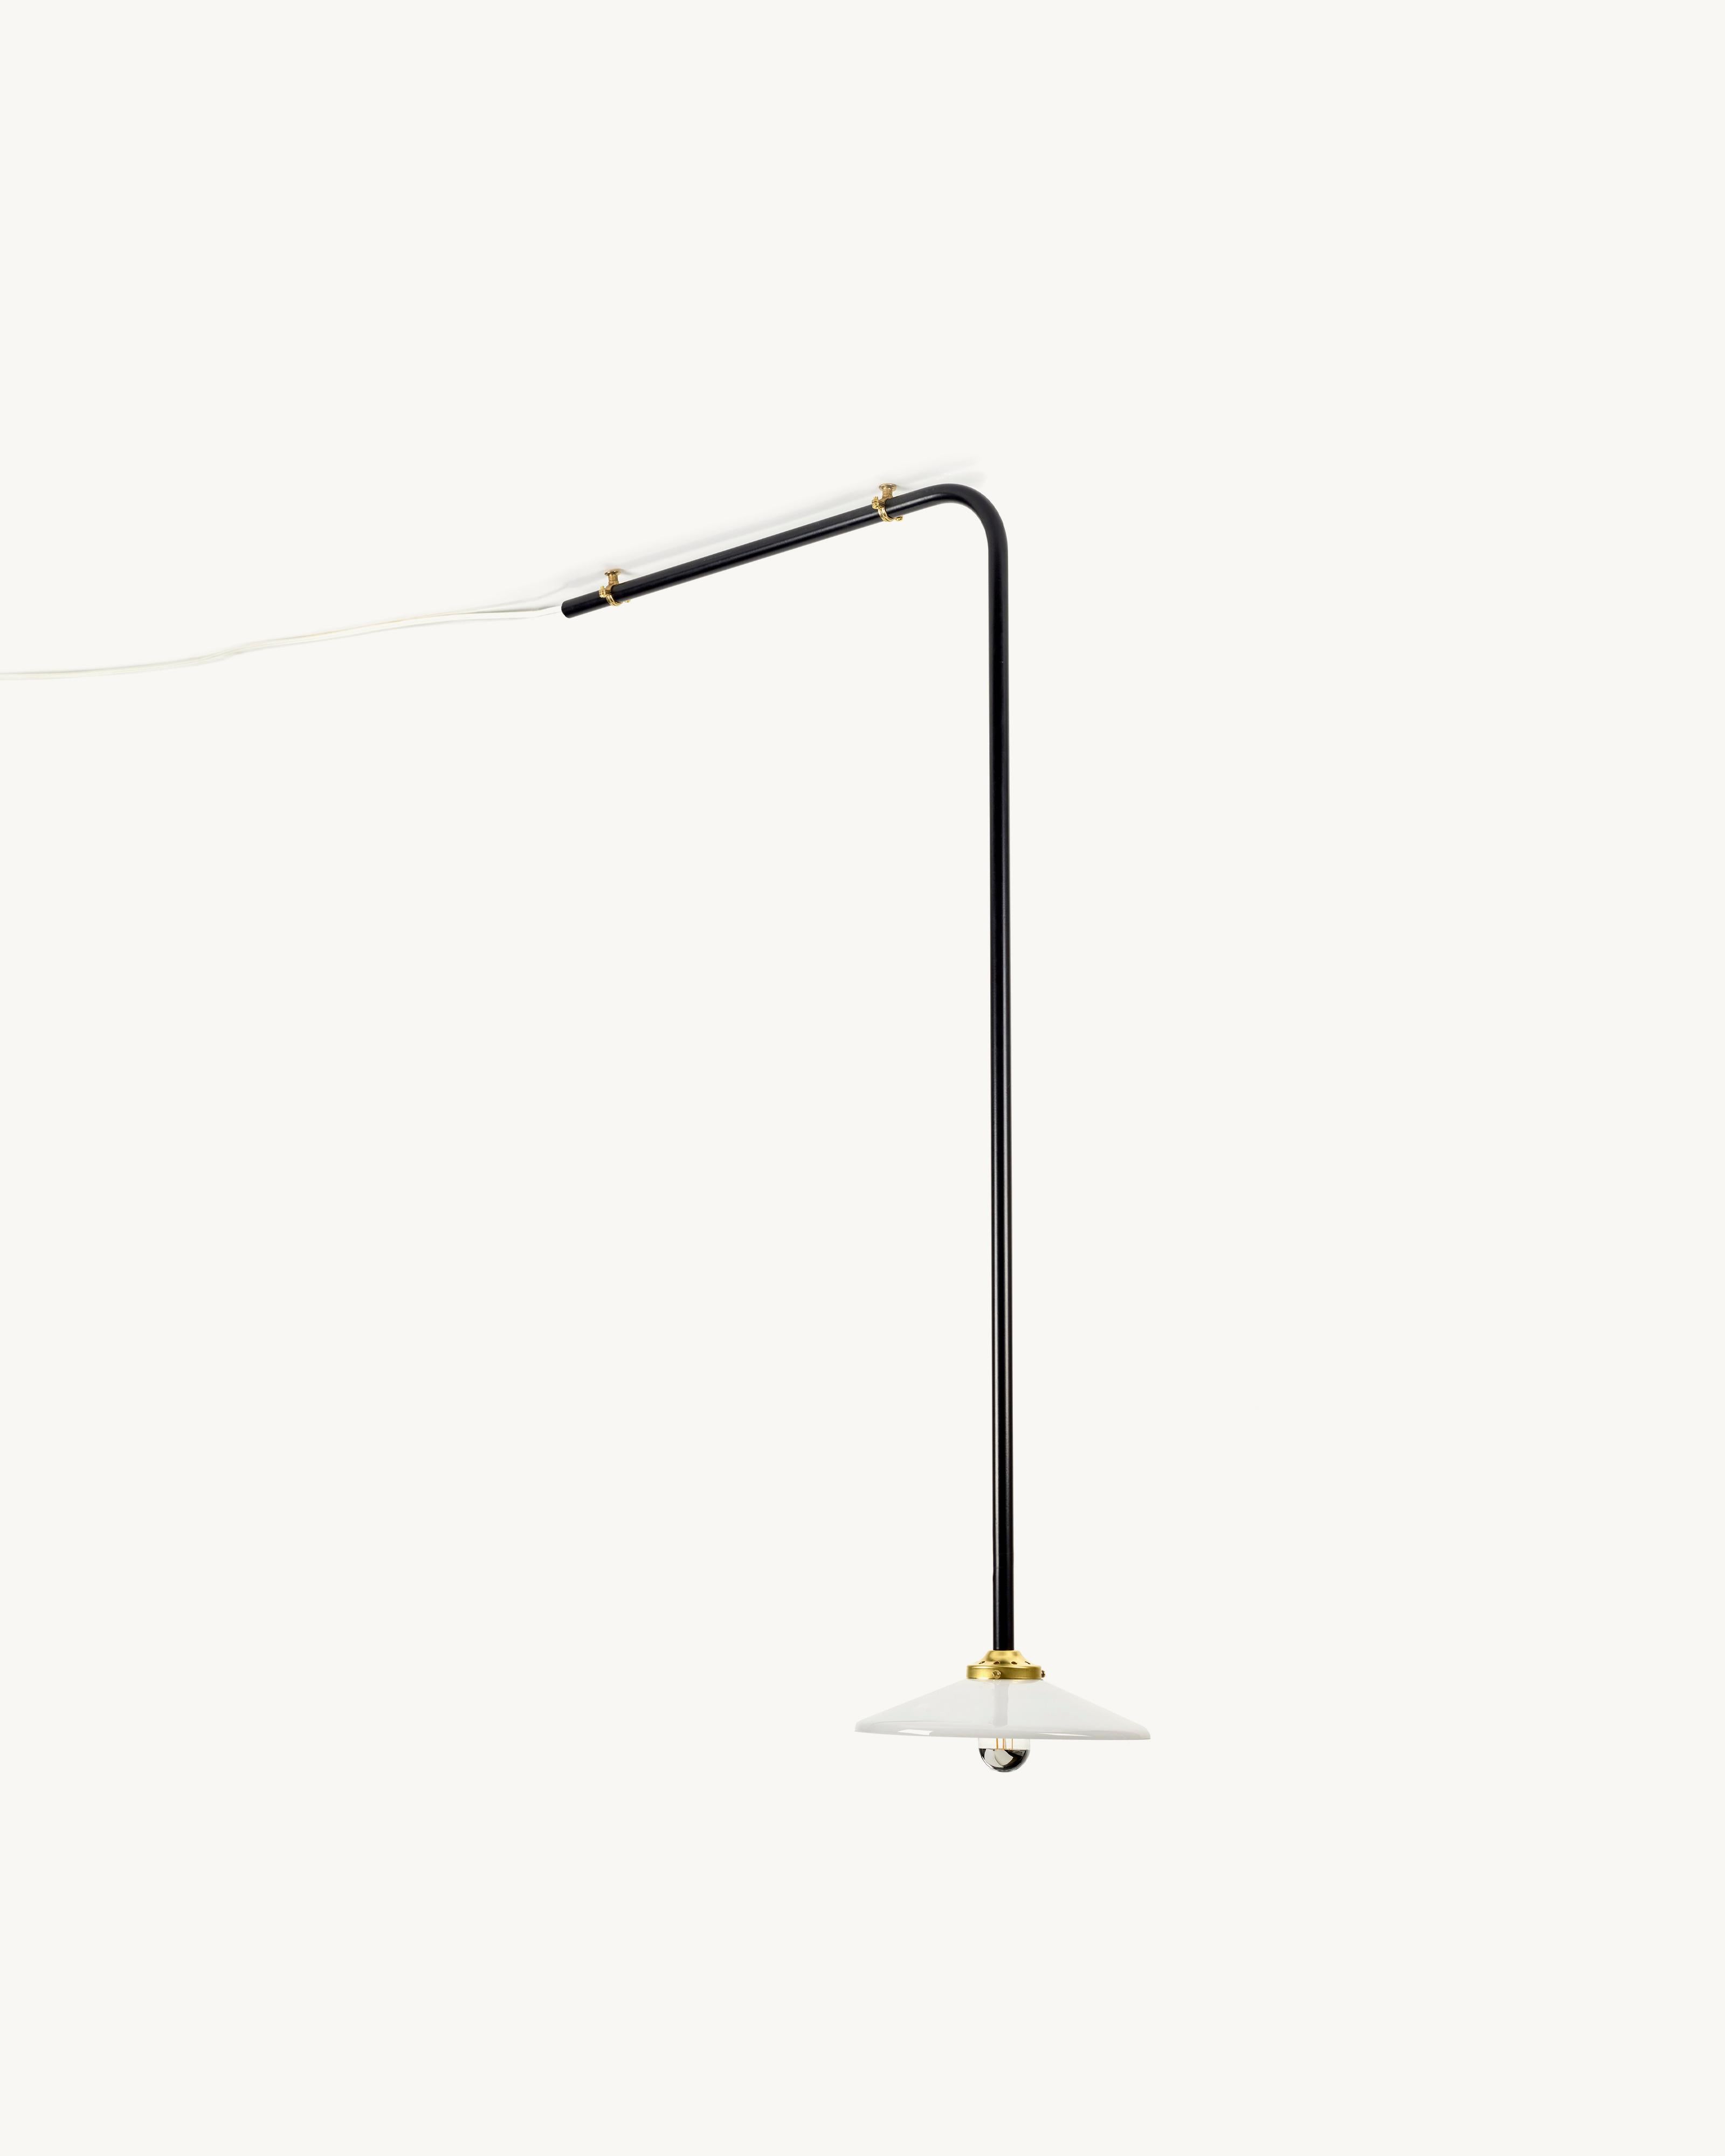 Steel Contemporary Ceiling Lamp N°2 by Muller Van Severen x Valerie Objects, Black For Sale